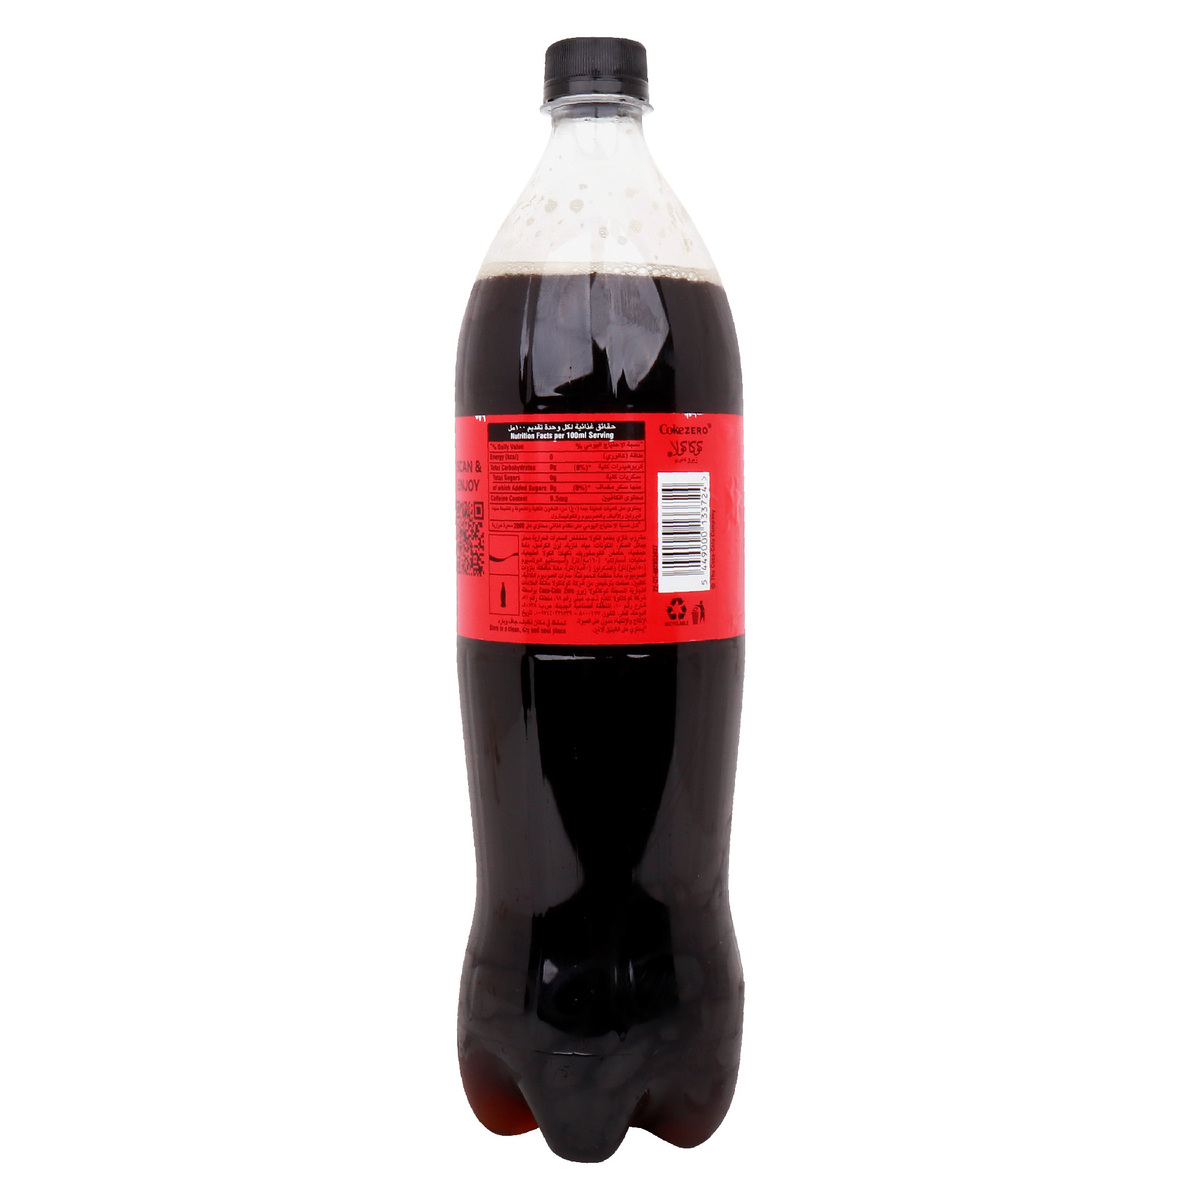 Coca Cola Zero 1.25 Litres